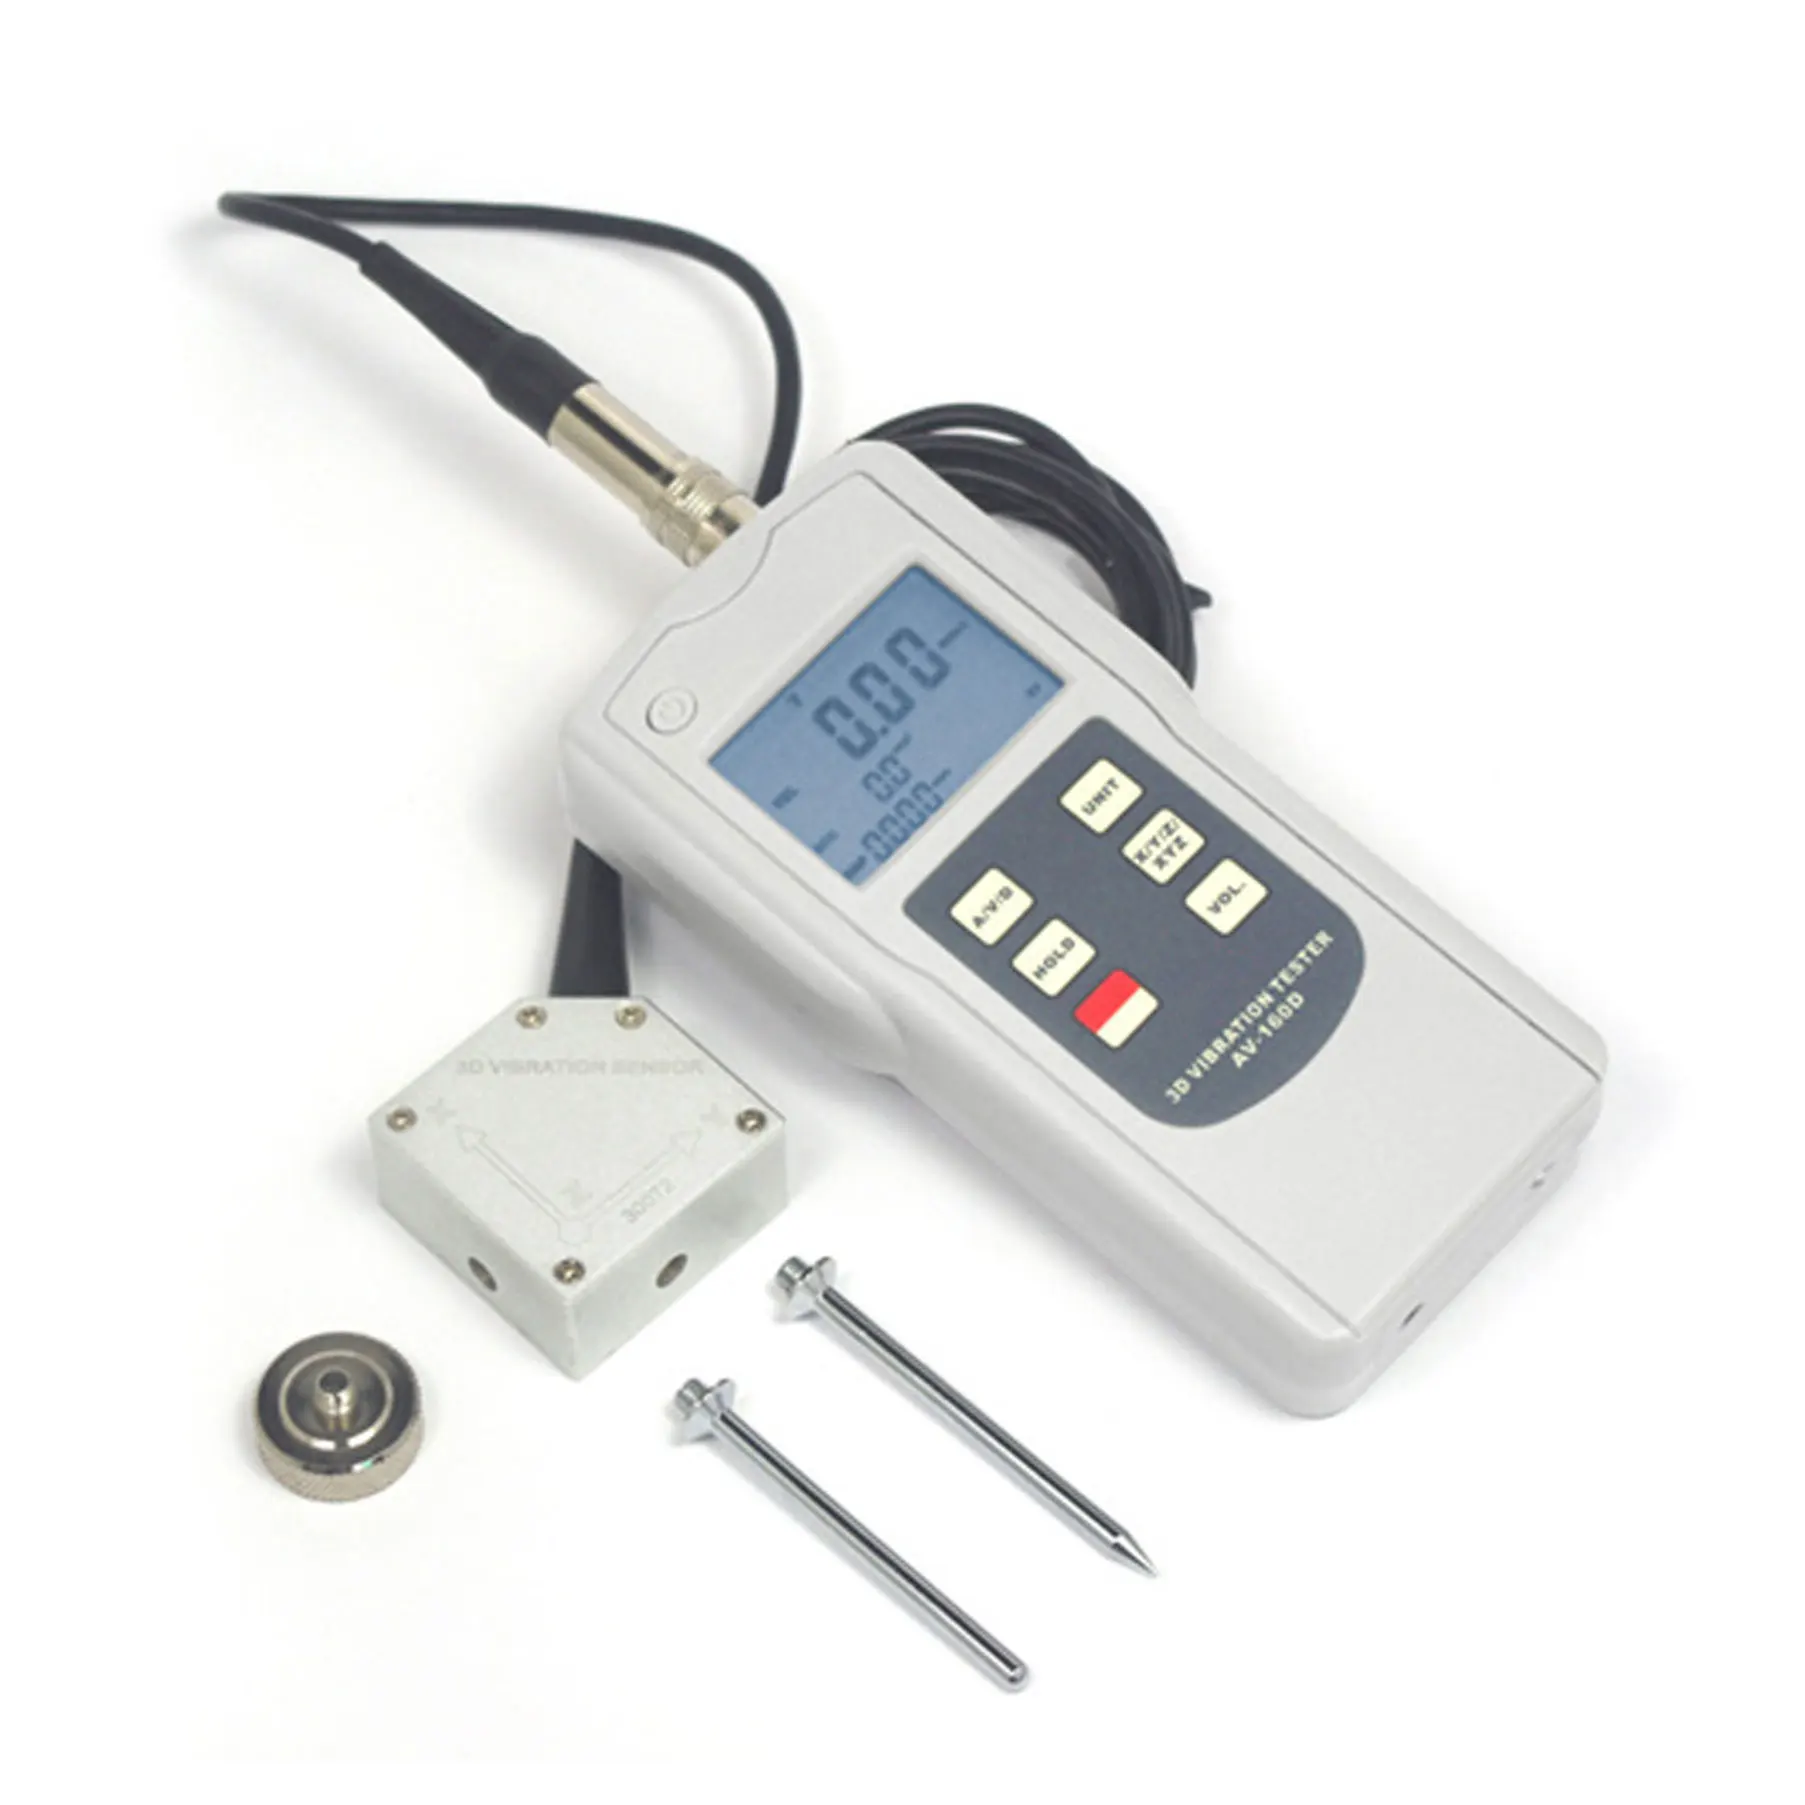 

AV-160D Portable 3D Vibration Tester Meter Analyzer 3-Axis Piezoelectric accelerometer Vibration Sensor